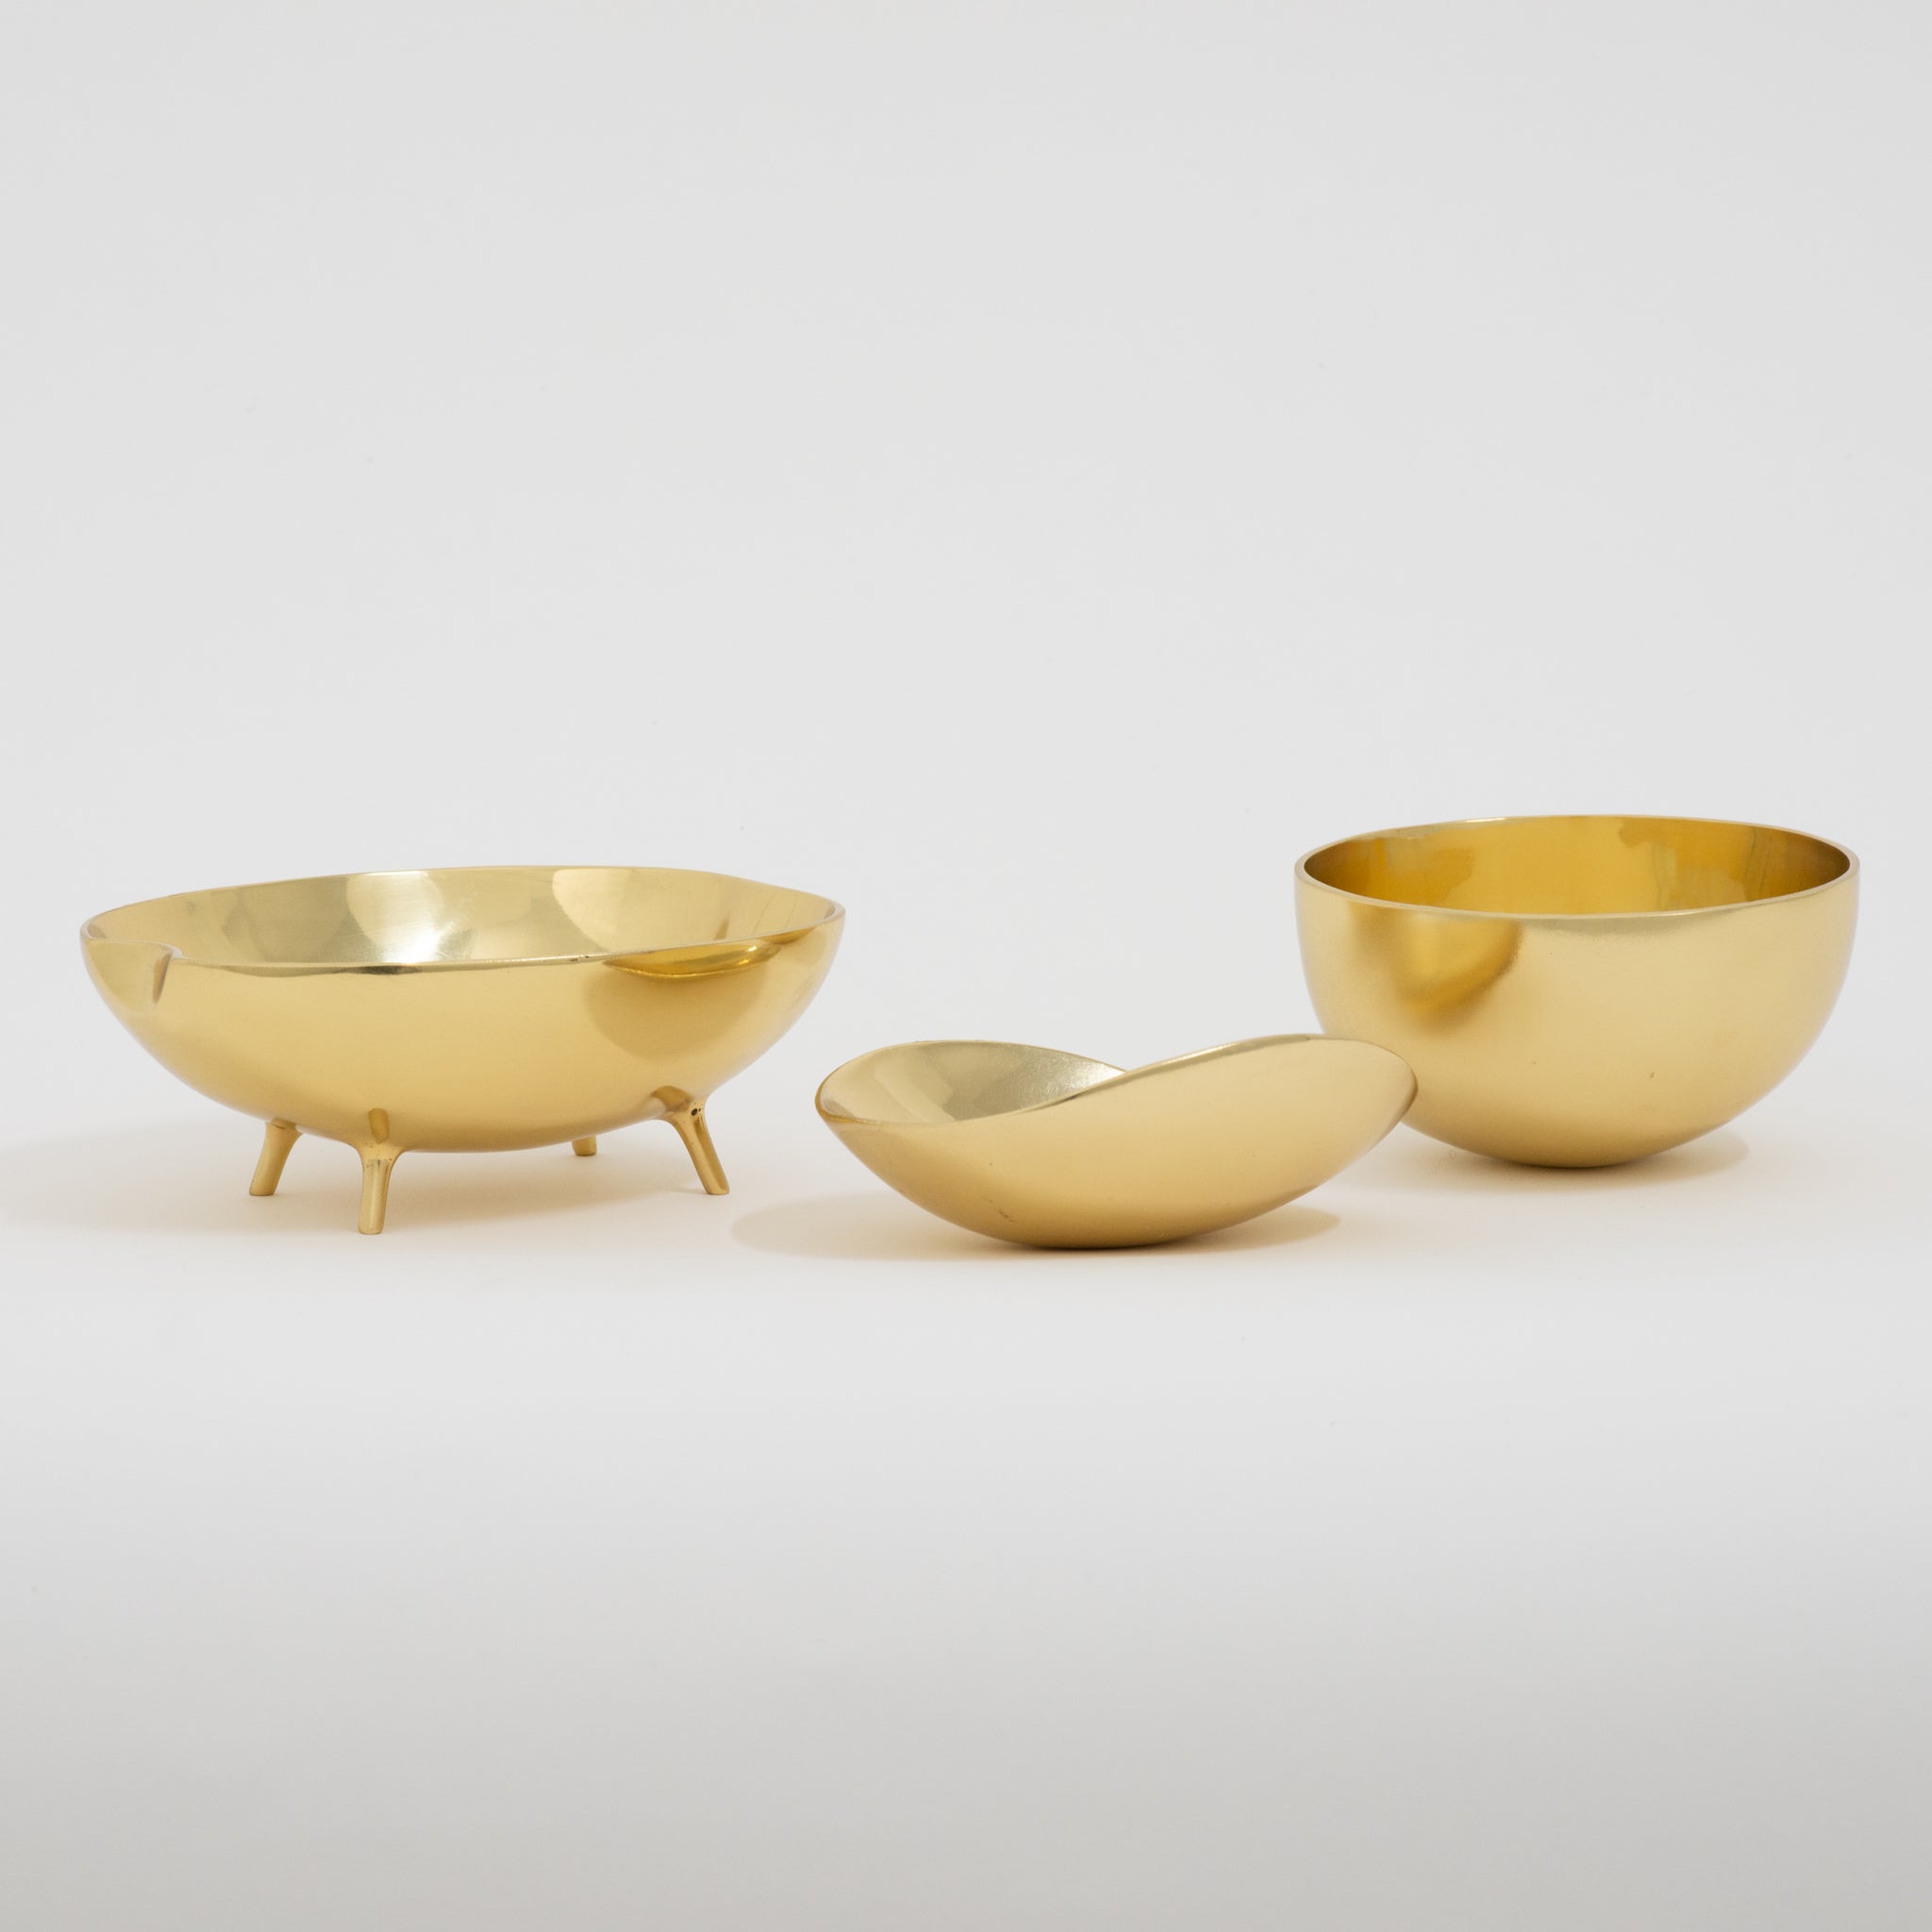 Foundations Polished Brass Metal Decorative Bowl